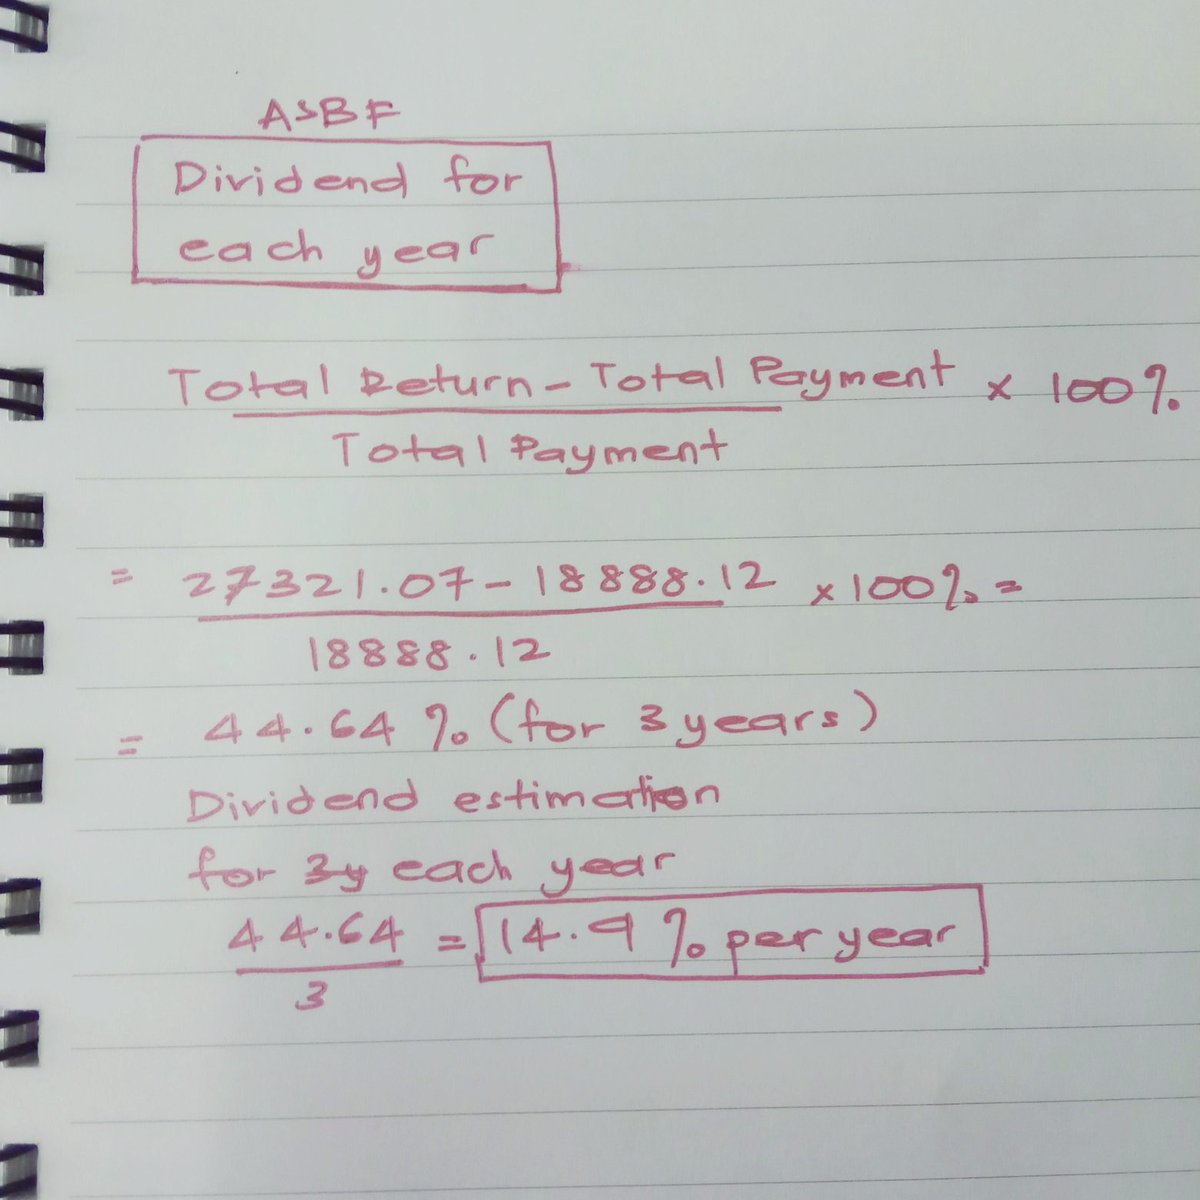 Asbf calculator